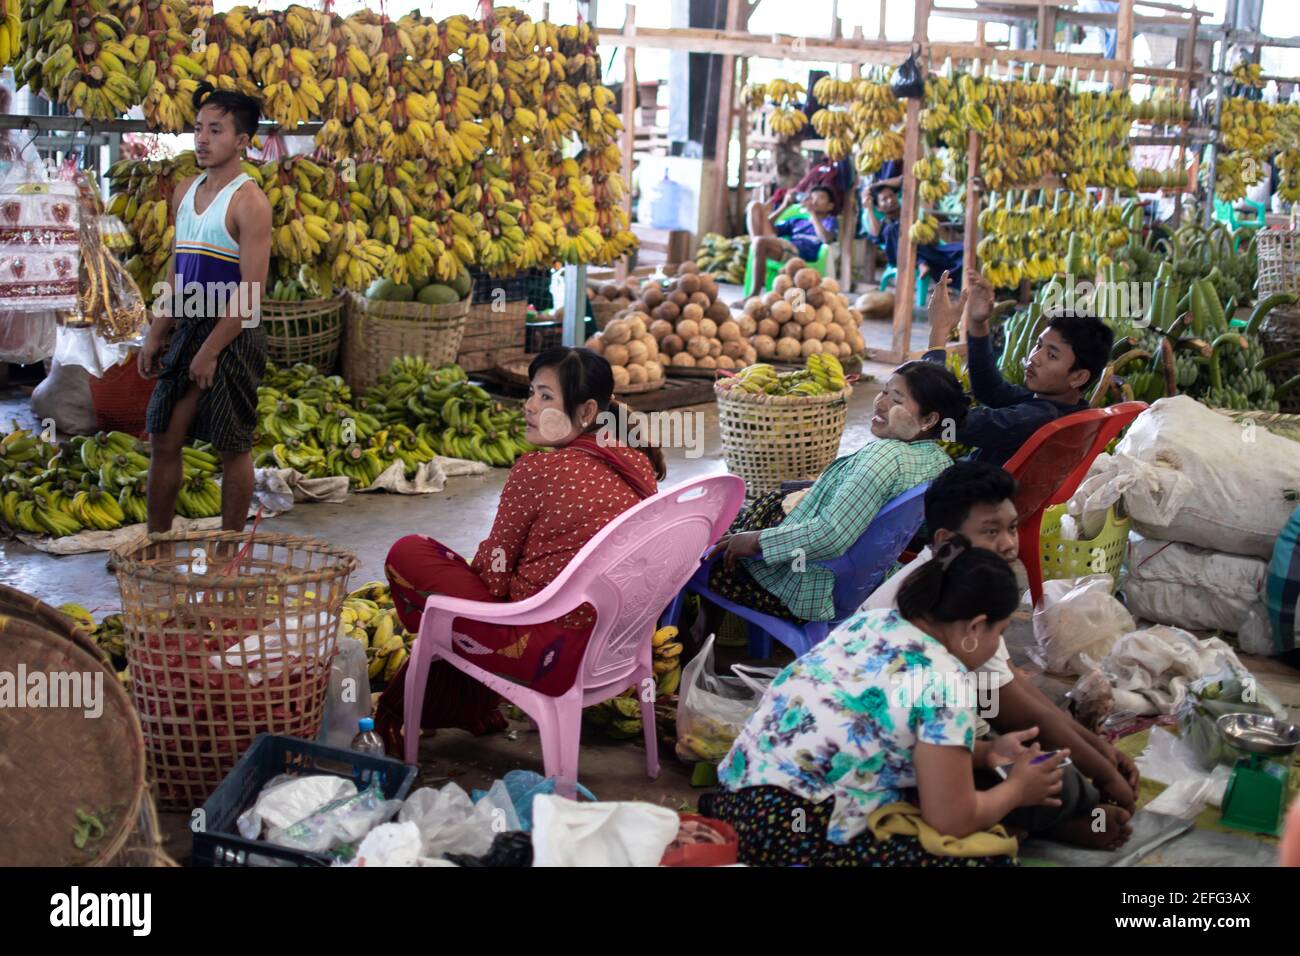 YANGON, MYANMAR - DECEMEBER 31 2019: Local Burmese people attending a street market by plenty of bananas and coconuts Stock Photo